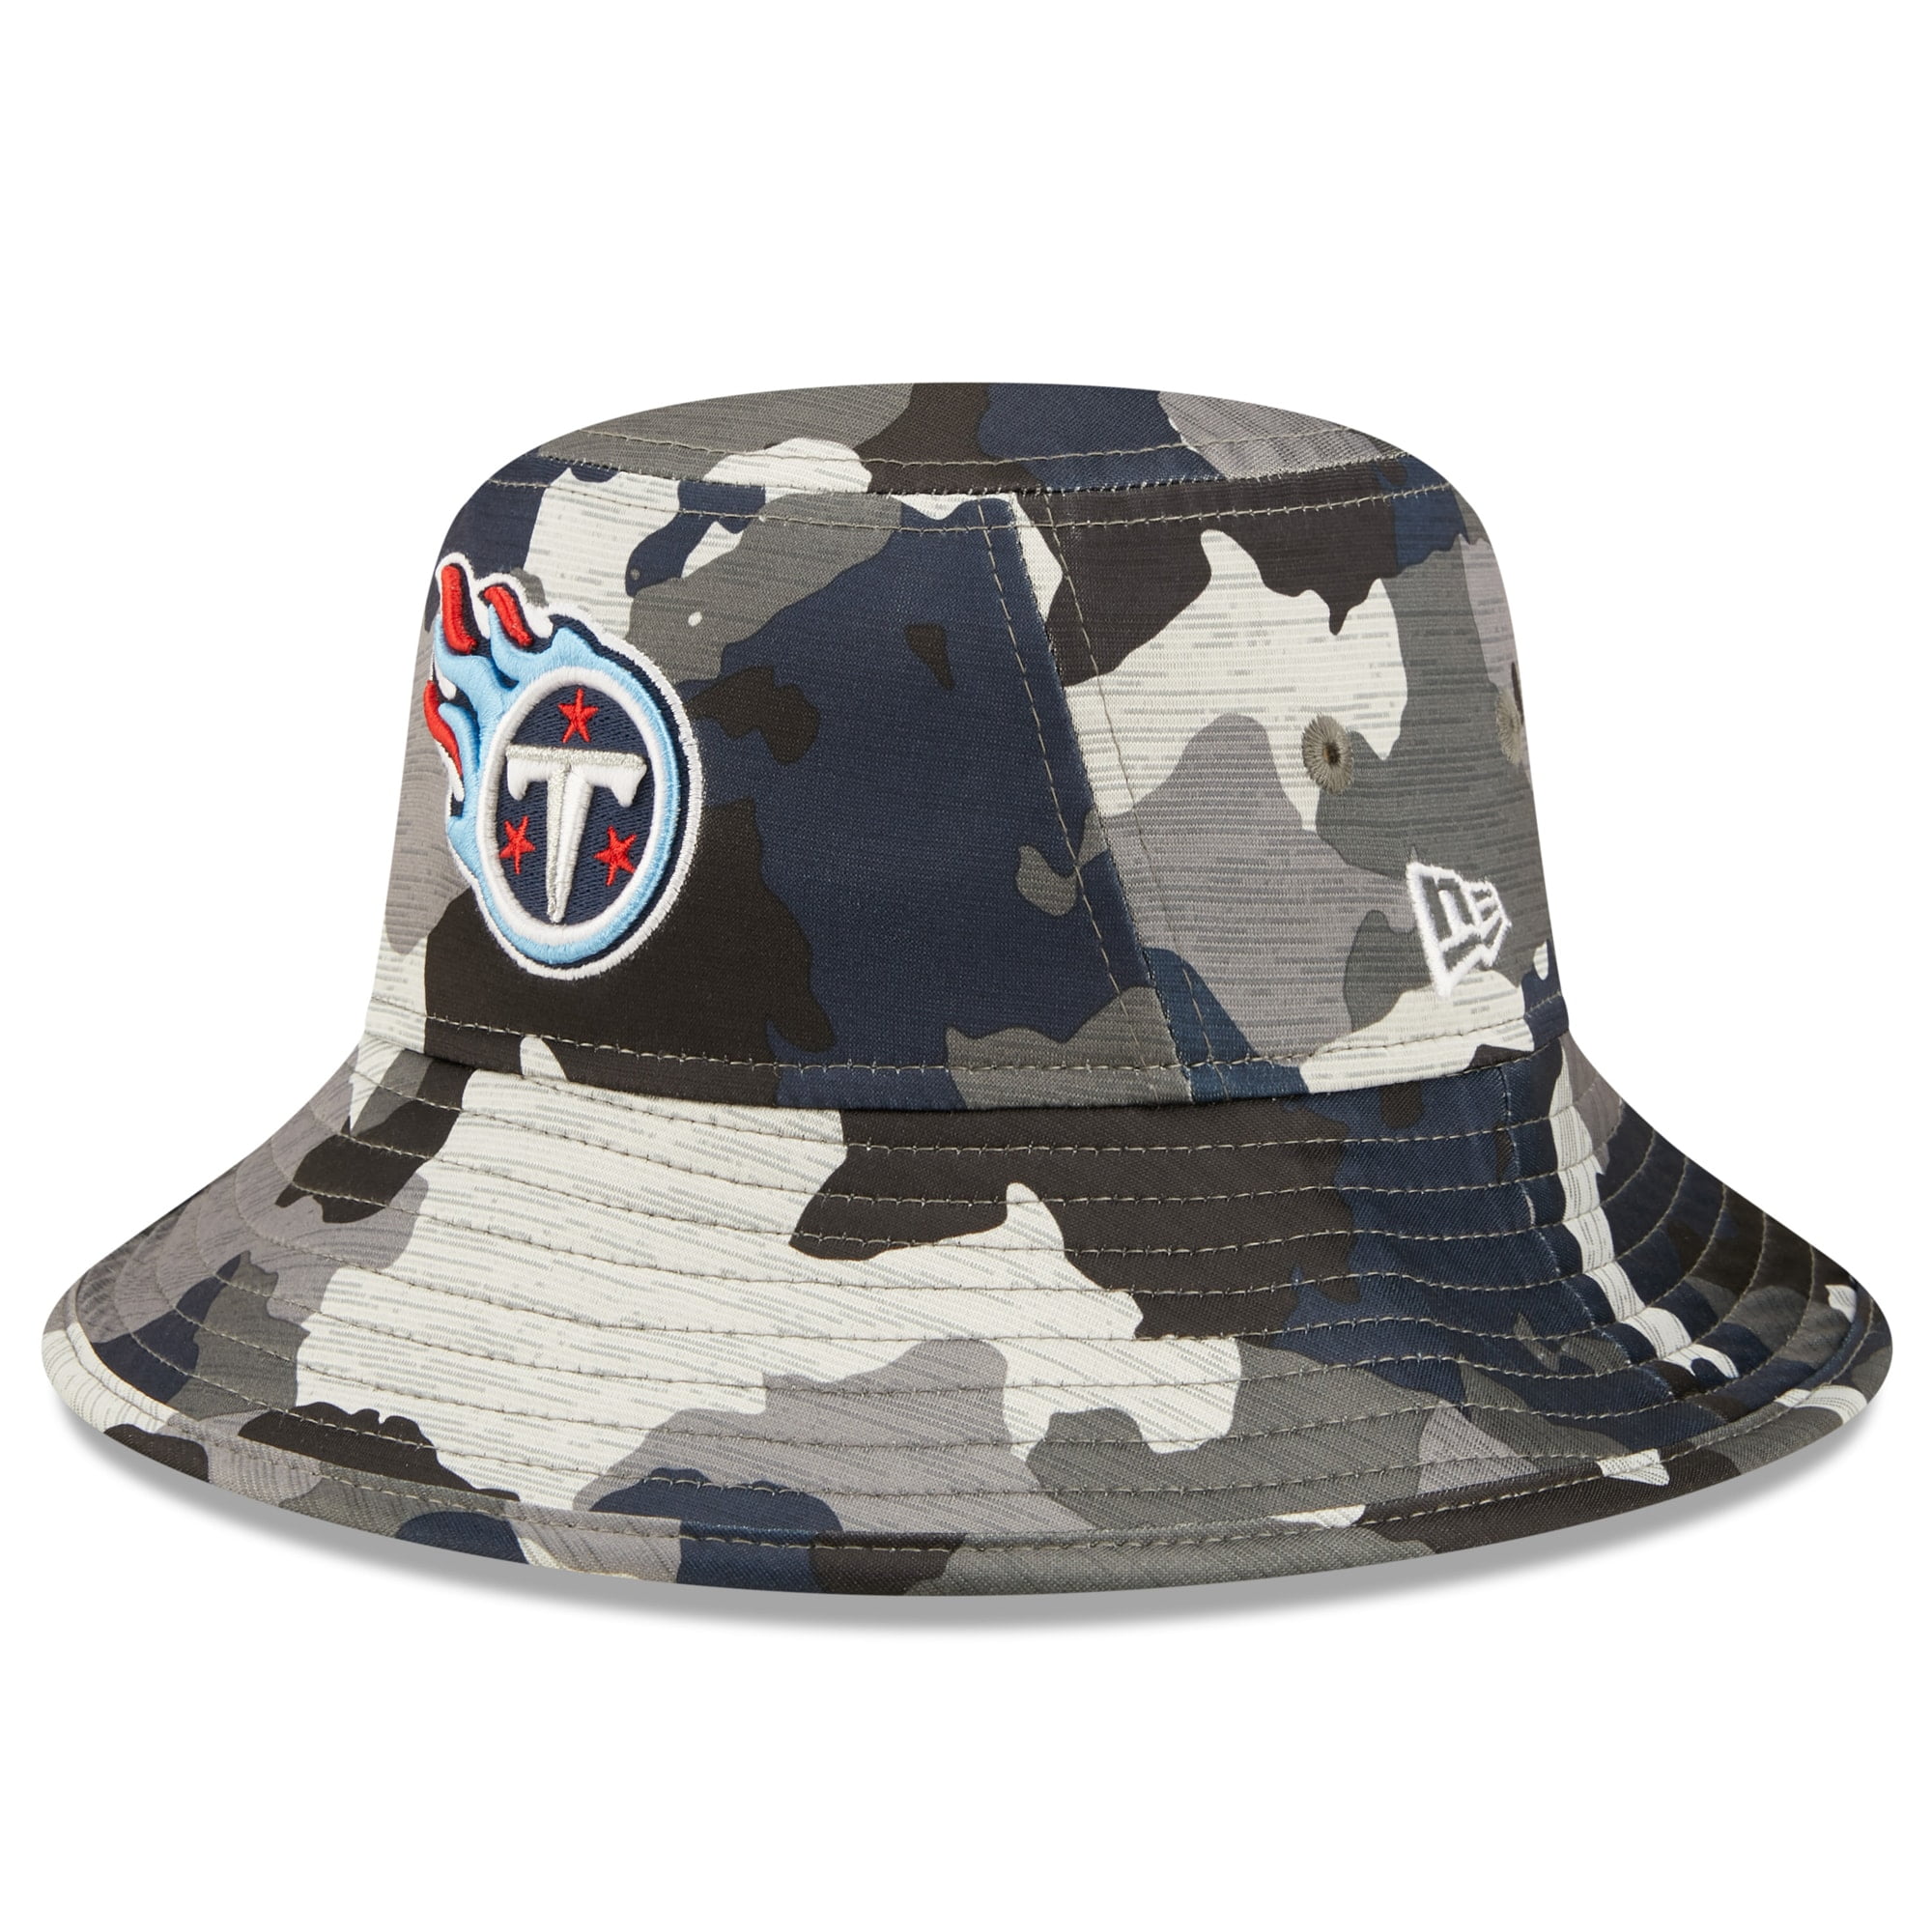 Fishing Hats for Men/Women Ten-Nessee Logo Tit-A-Ns Sun Protection Floppy Bucket Beach Sun Hat Boonie Cap Fishermans Hat 